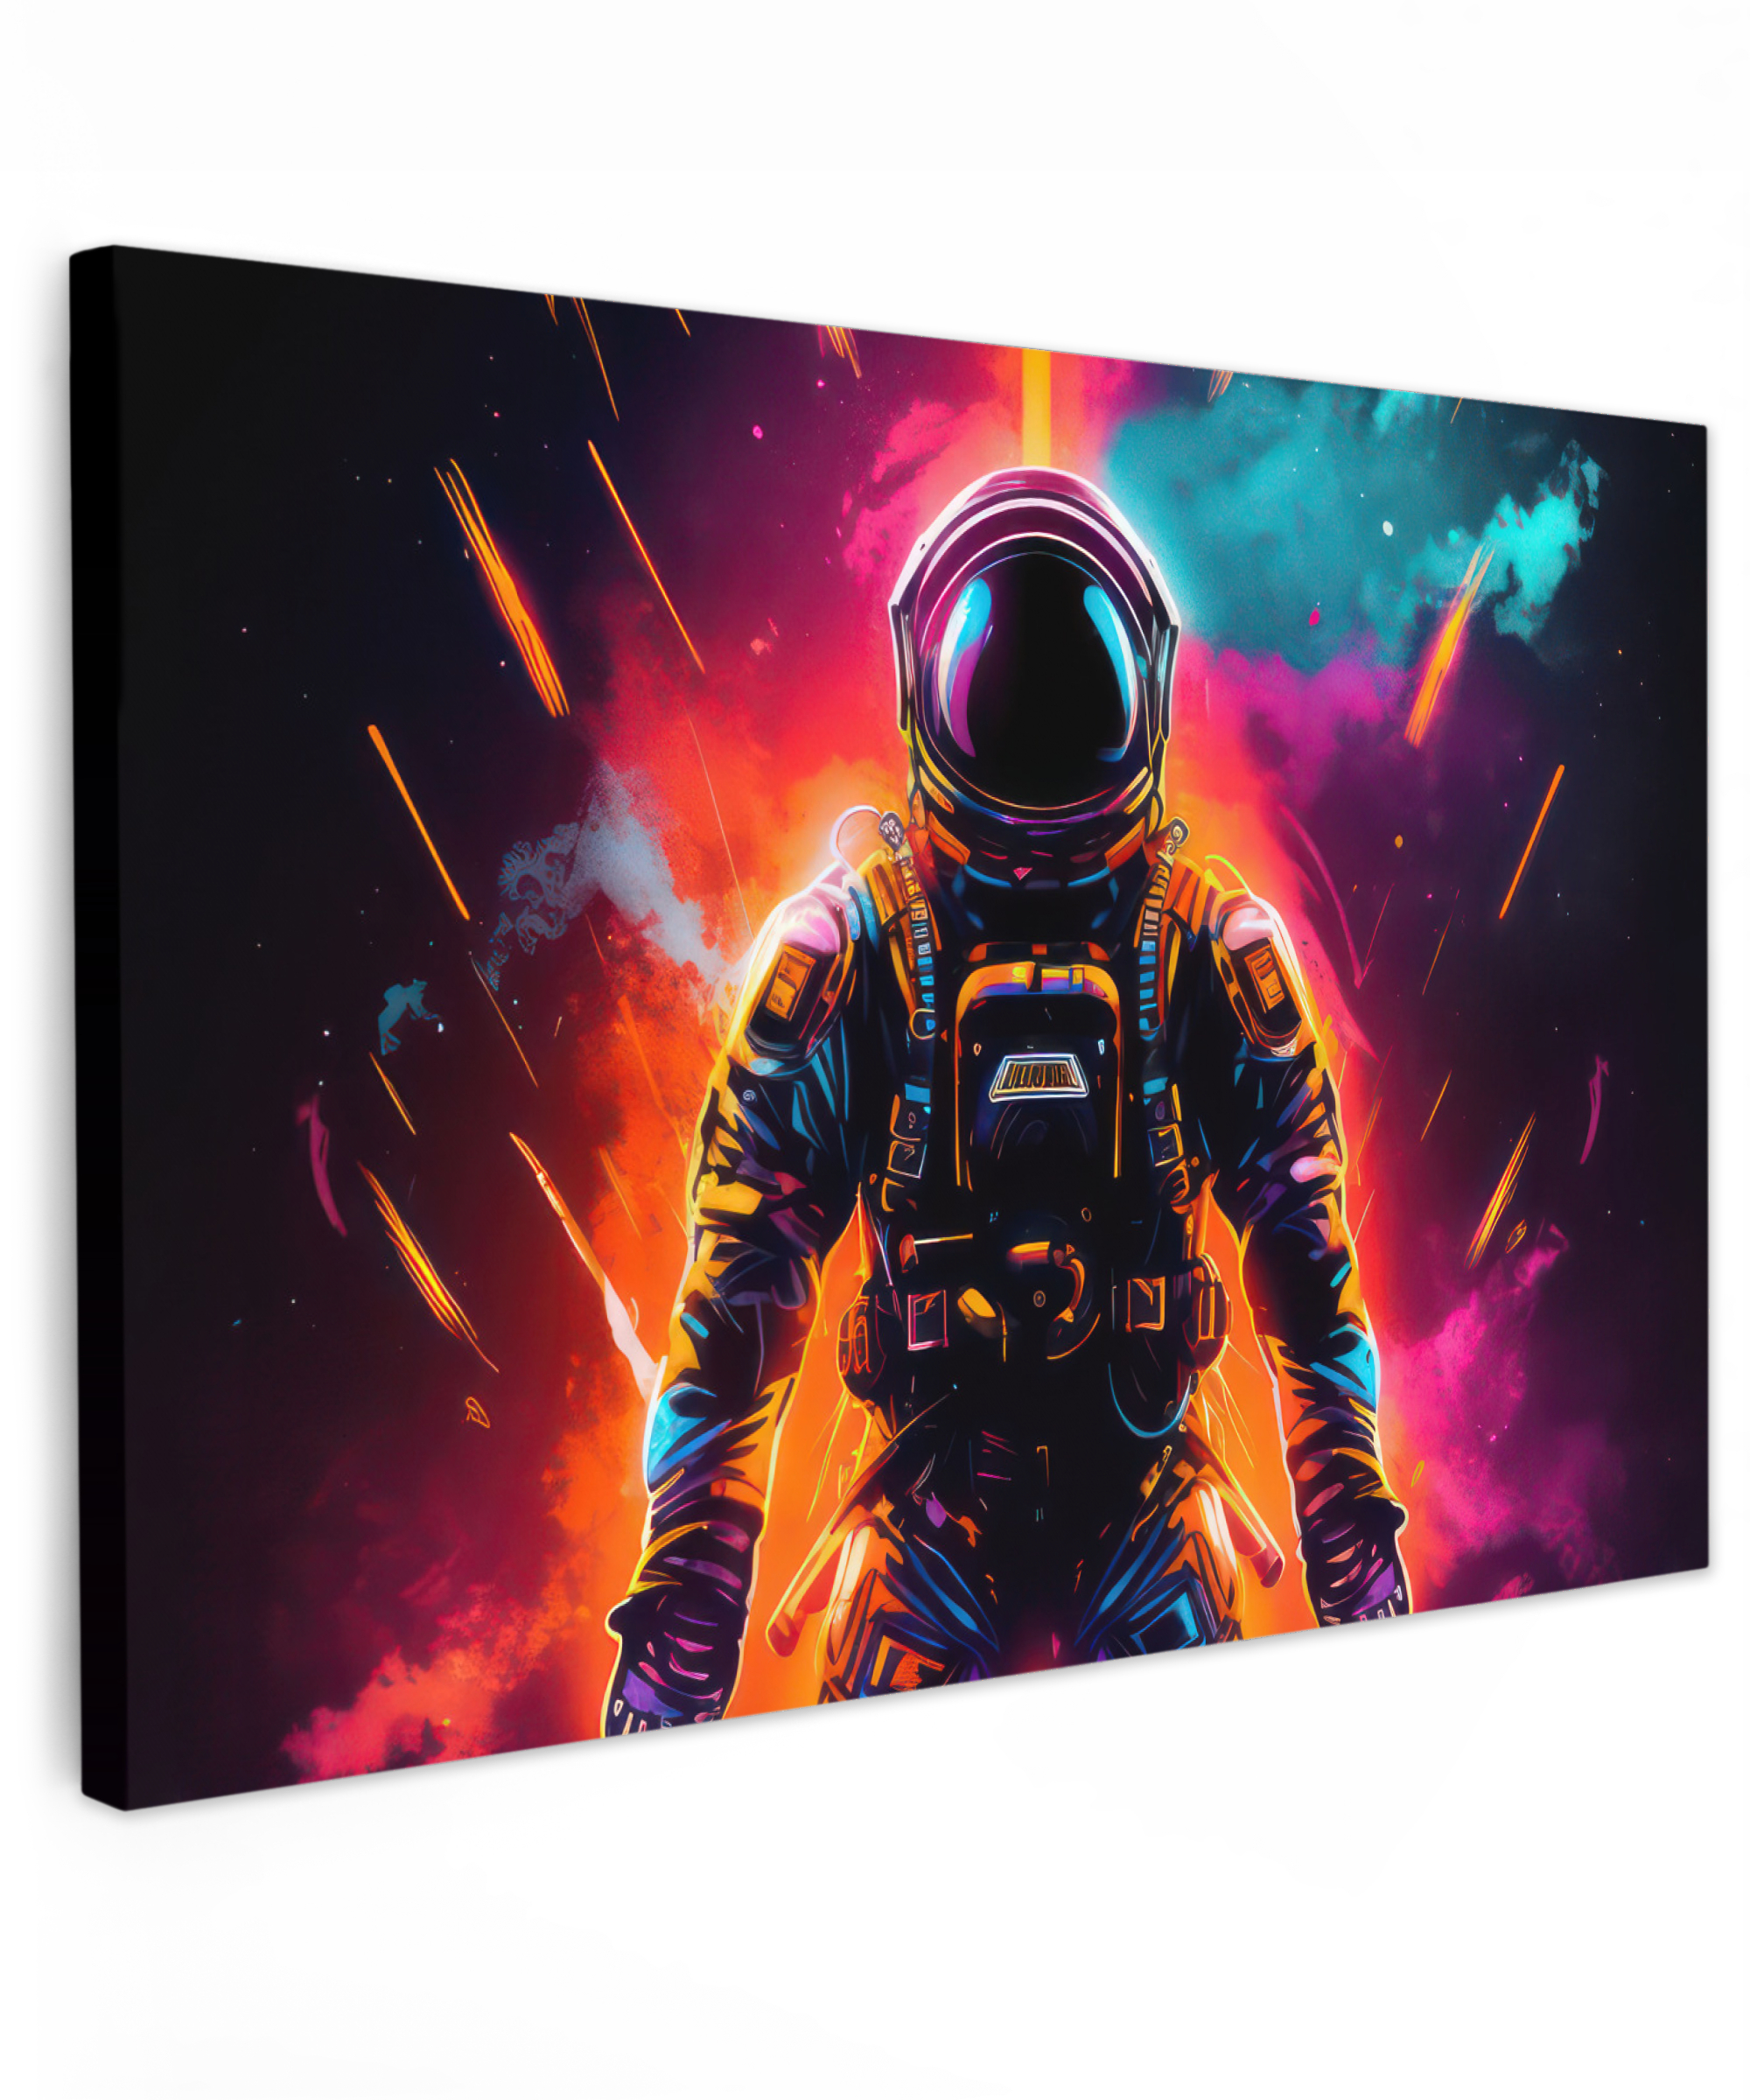 Leinwandbild - Astronaut - Neon - Gaming - Weltraum